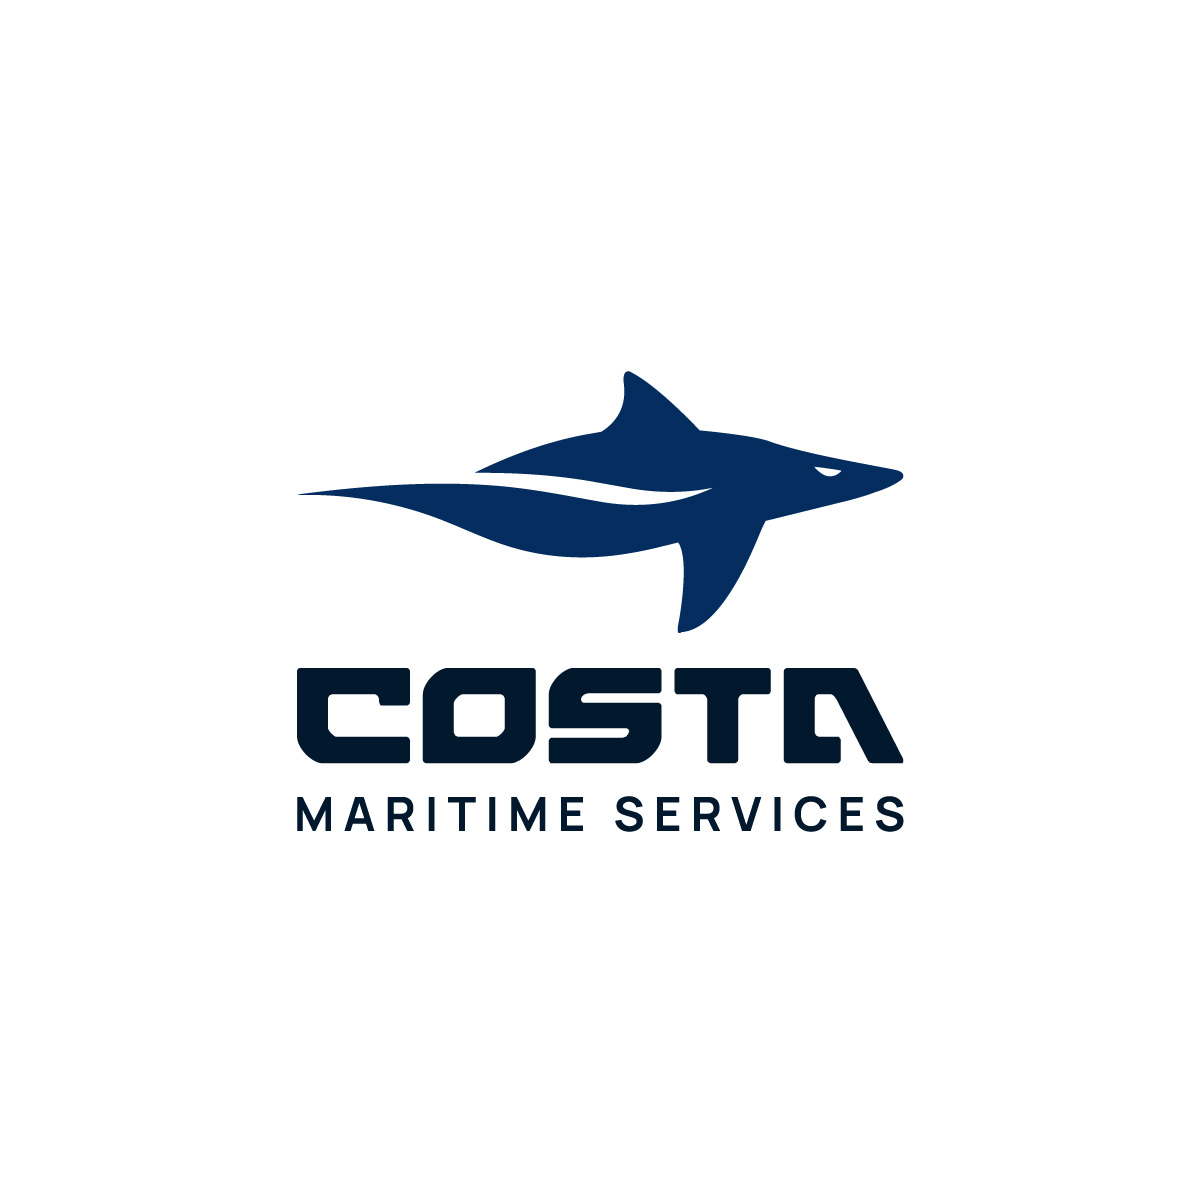 Costa Maritime Services